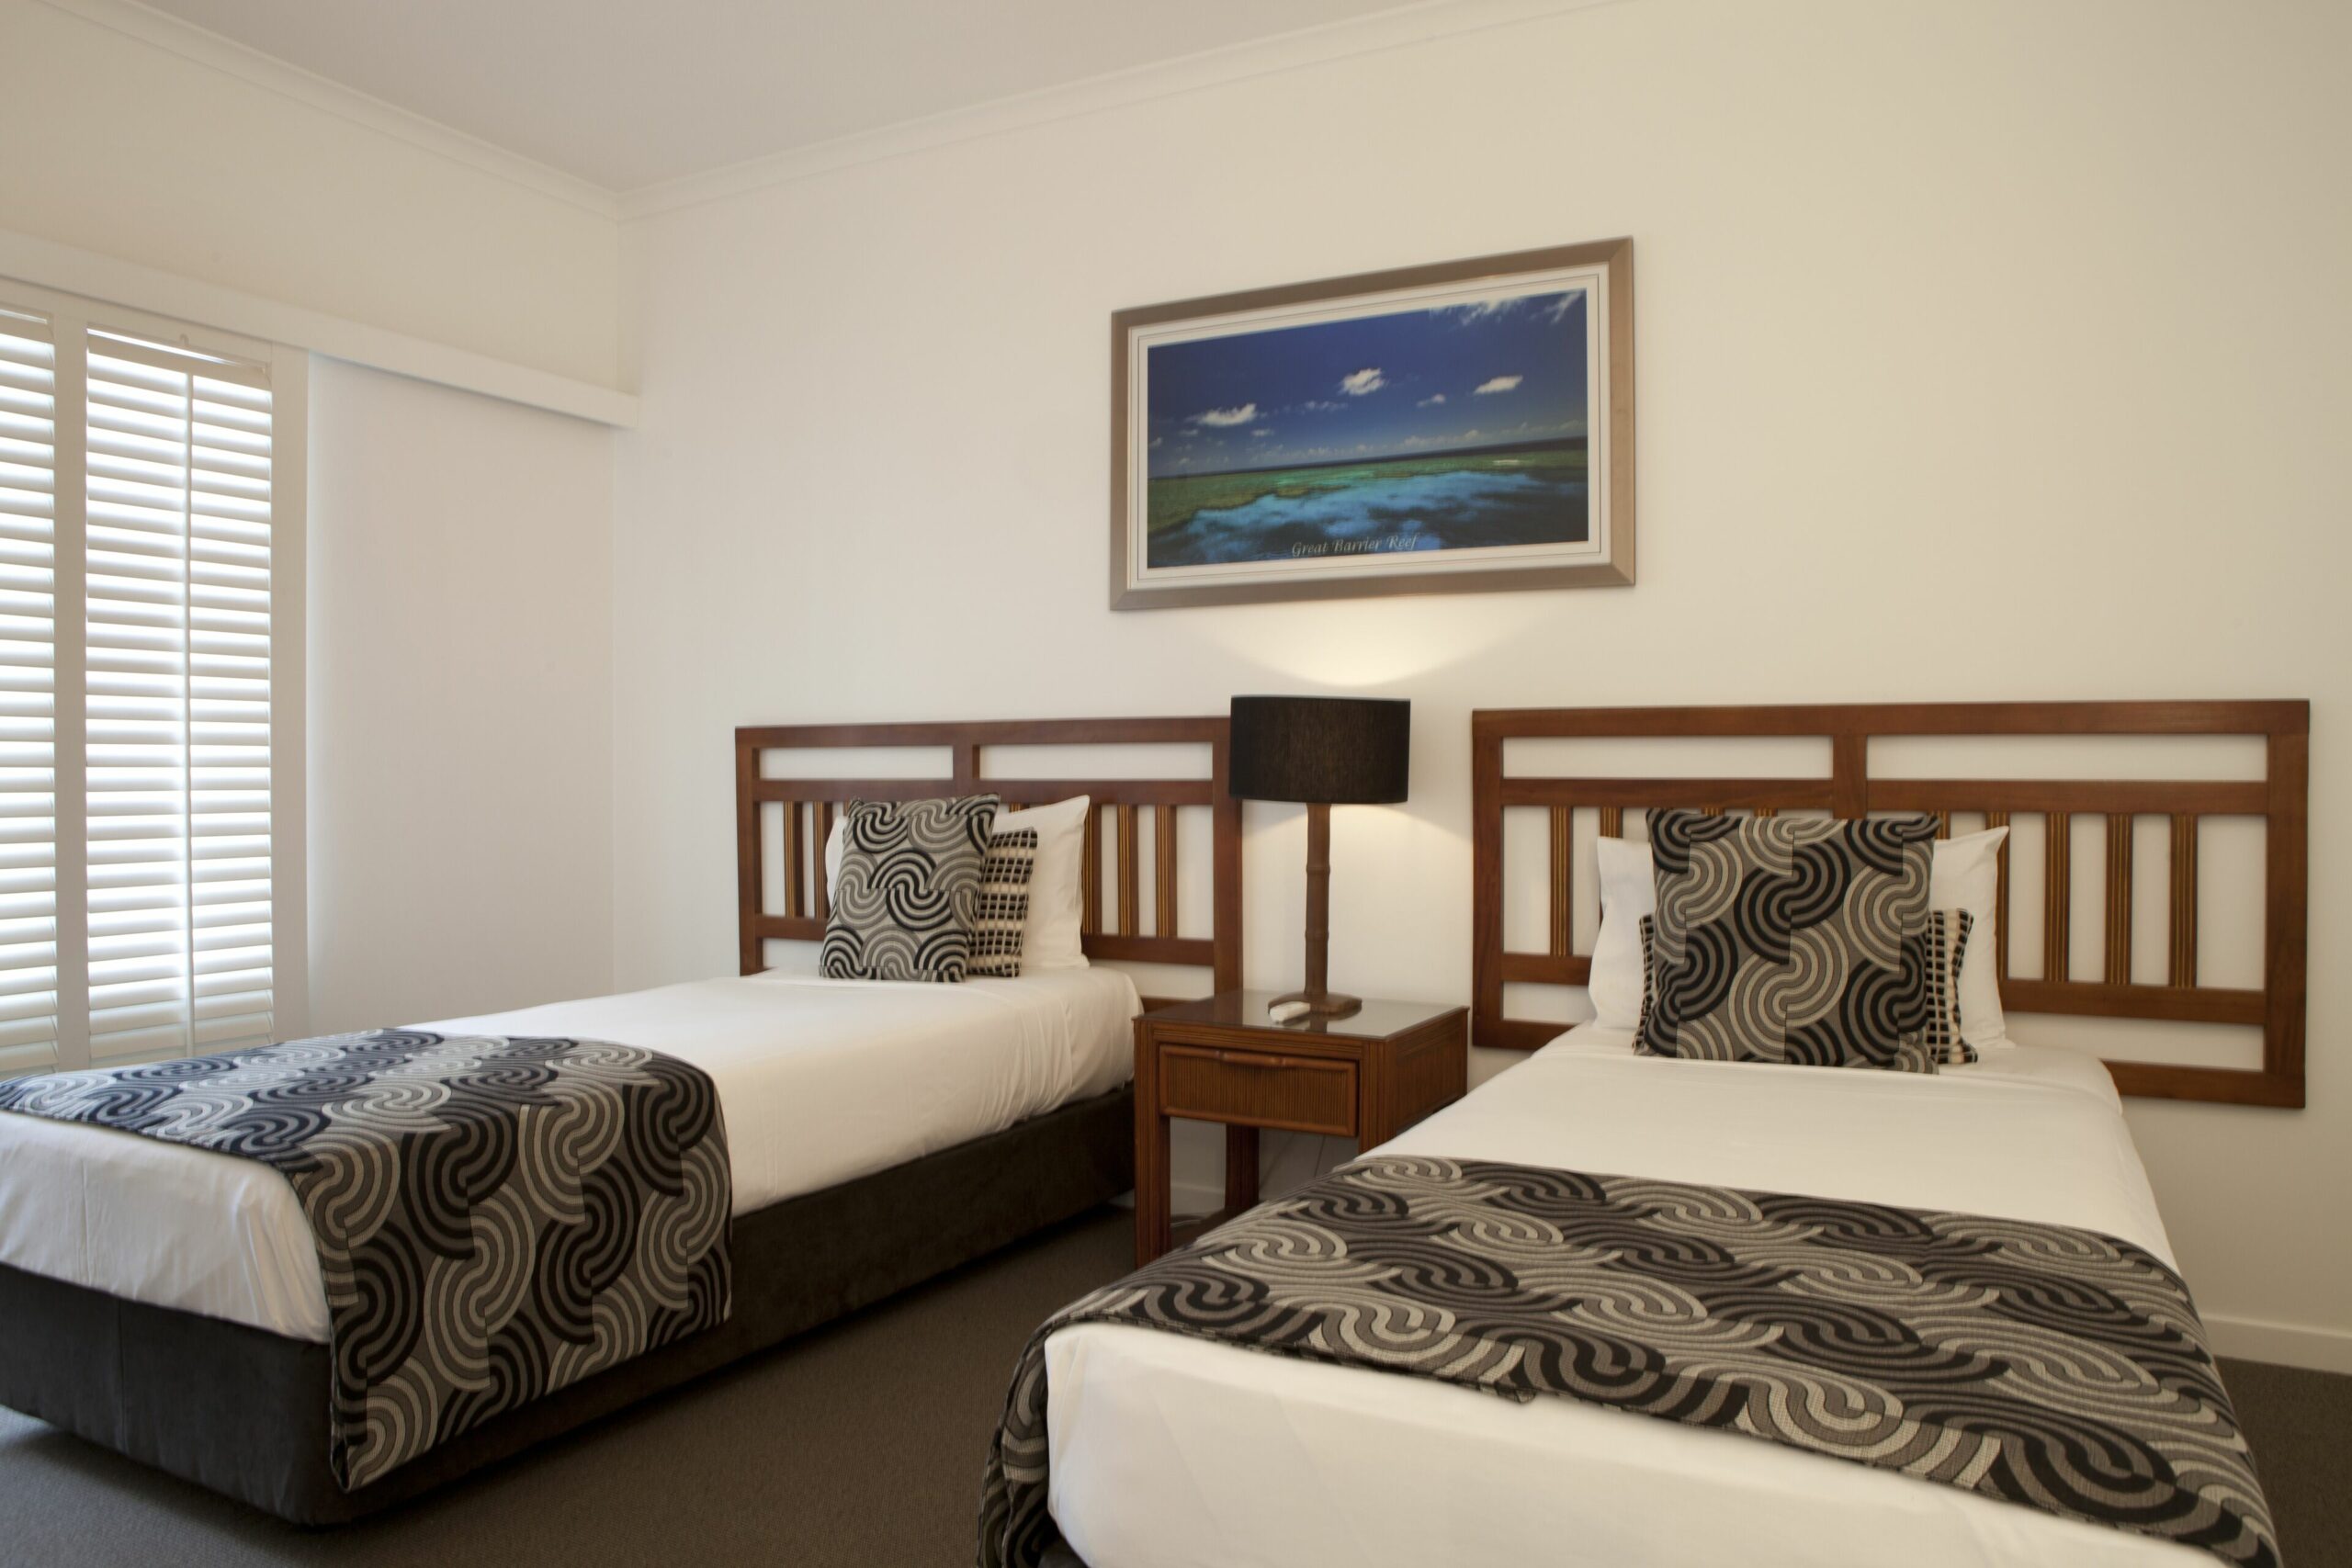 Ramada Resort by Wyndham Port Douglas